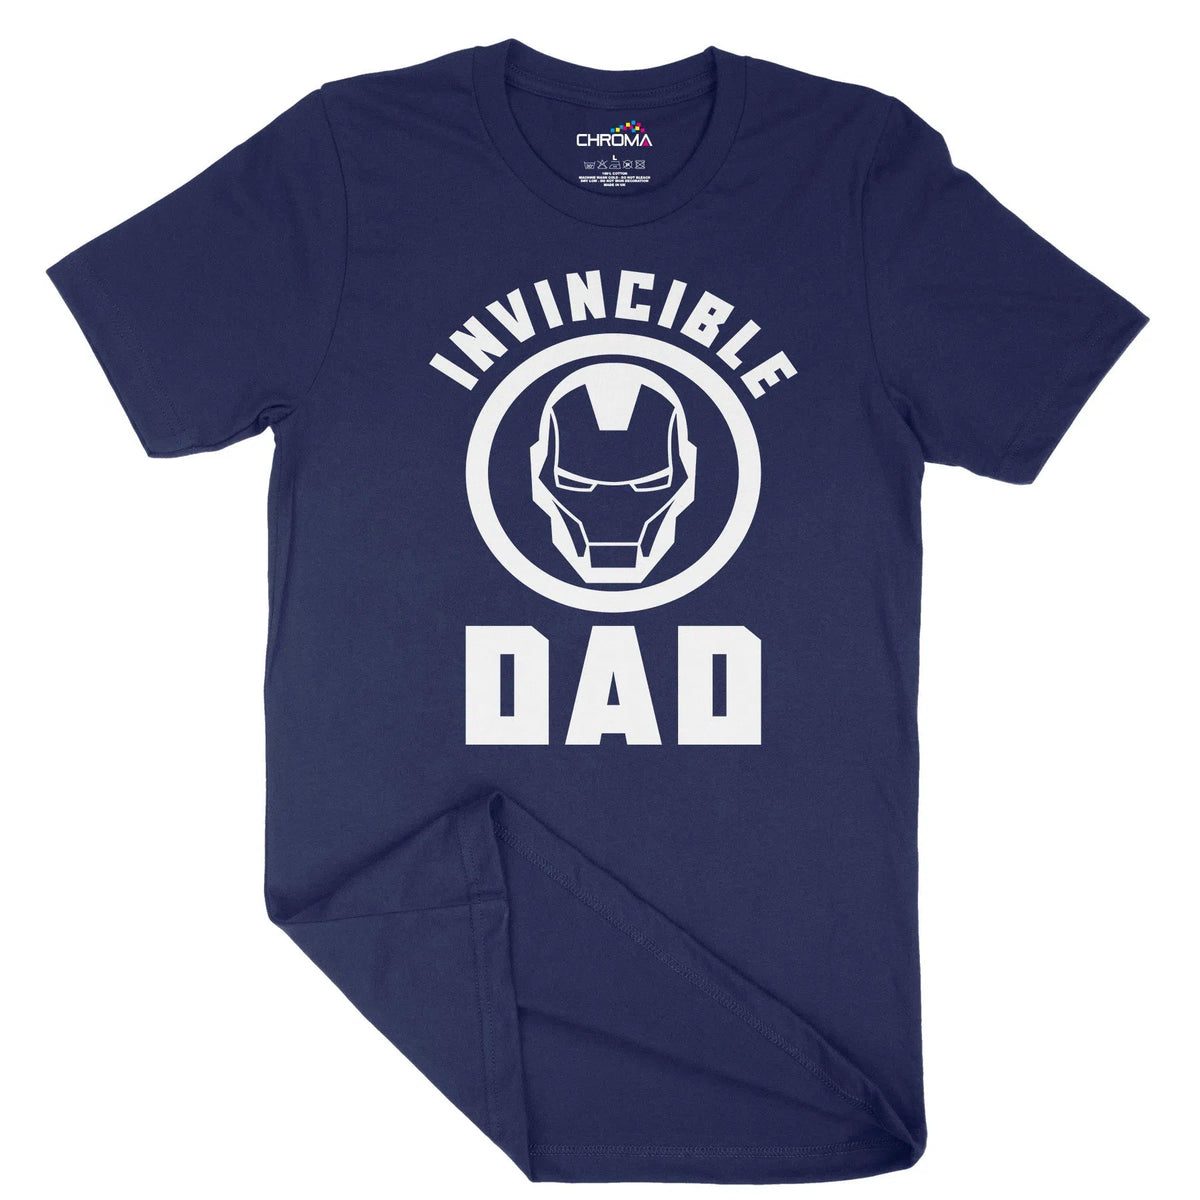 Invincible Dad Unisex Adult T-Shirt | Quality Slogan Clothing Chroma Clothing